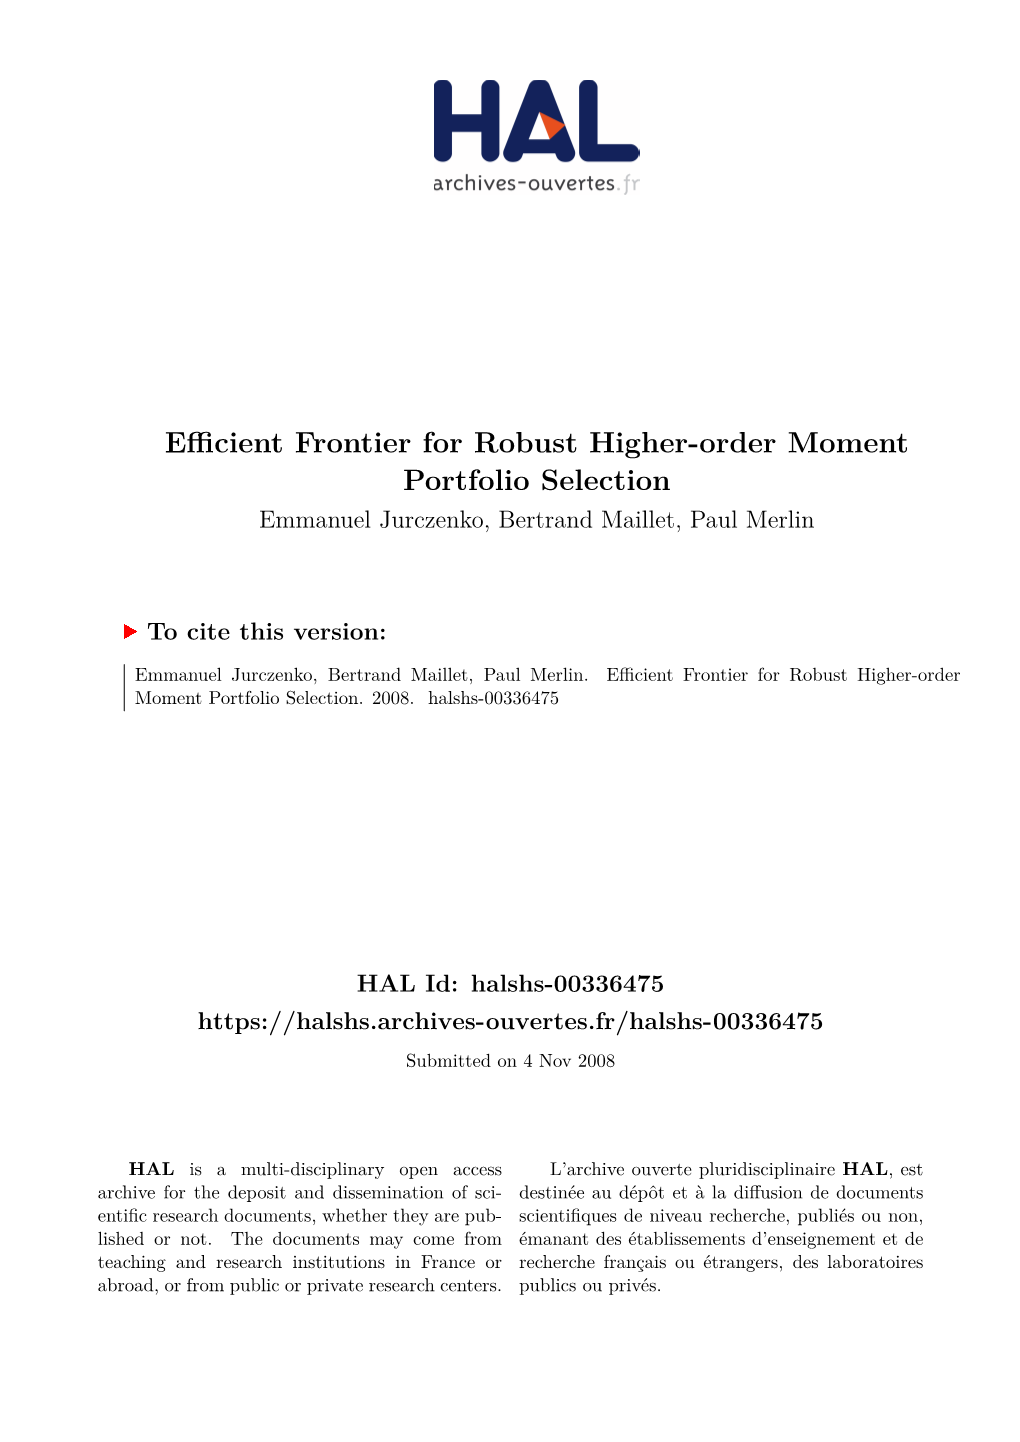 Efficient Frontier for Robust Higher-Order Moment Portfolio Selection